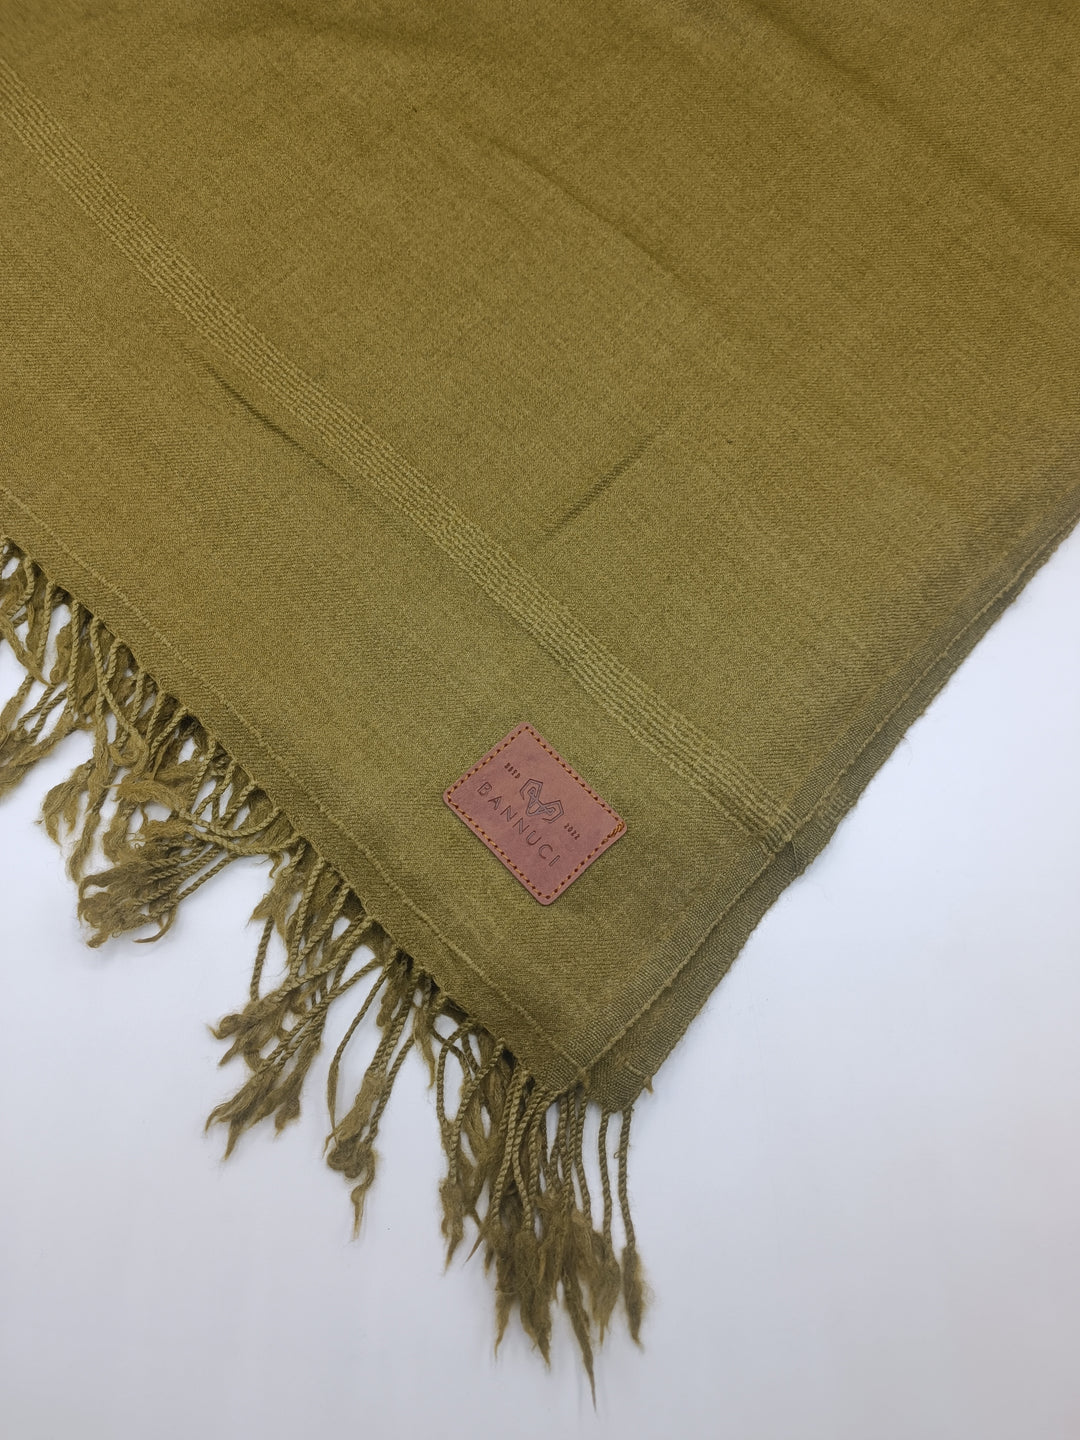 Premium Quality Hena Color Pure Woolen Shawl